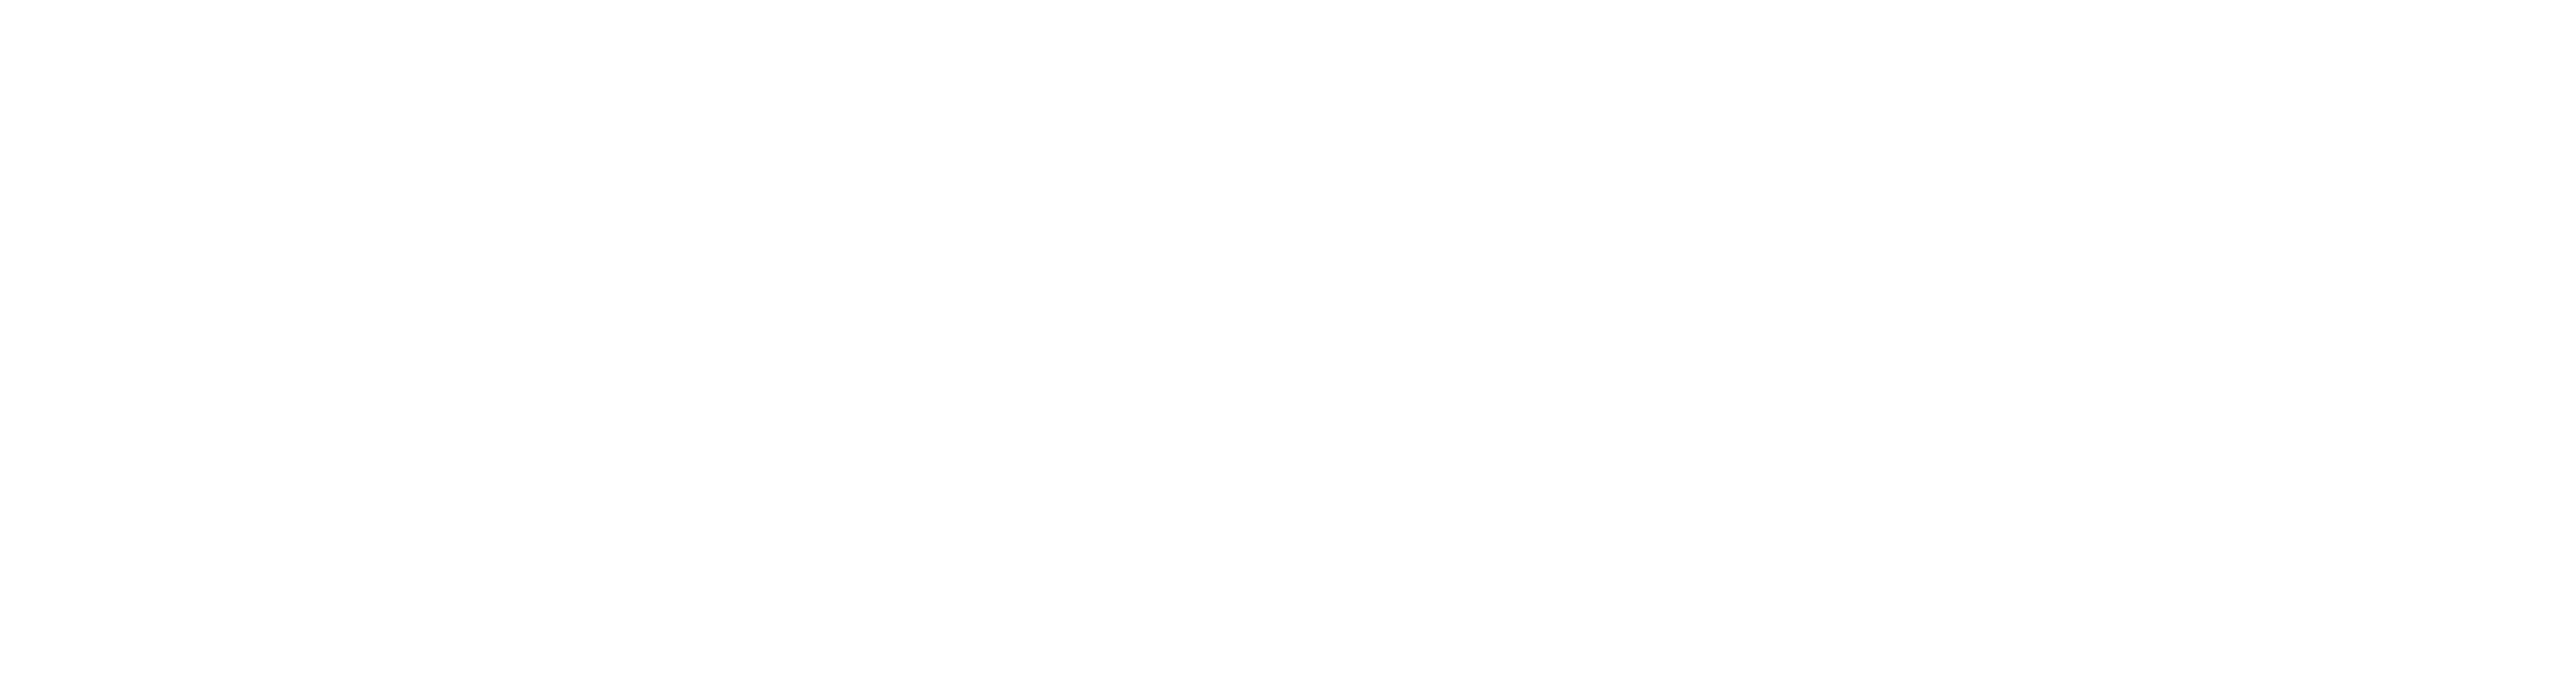 White logo - no background